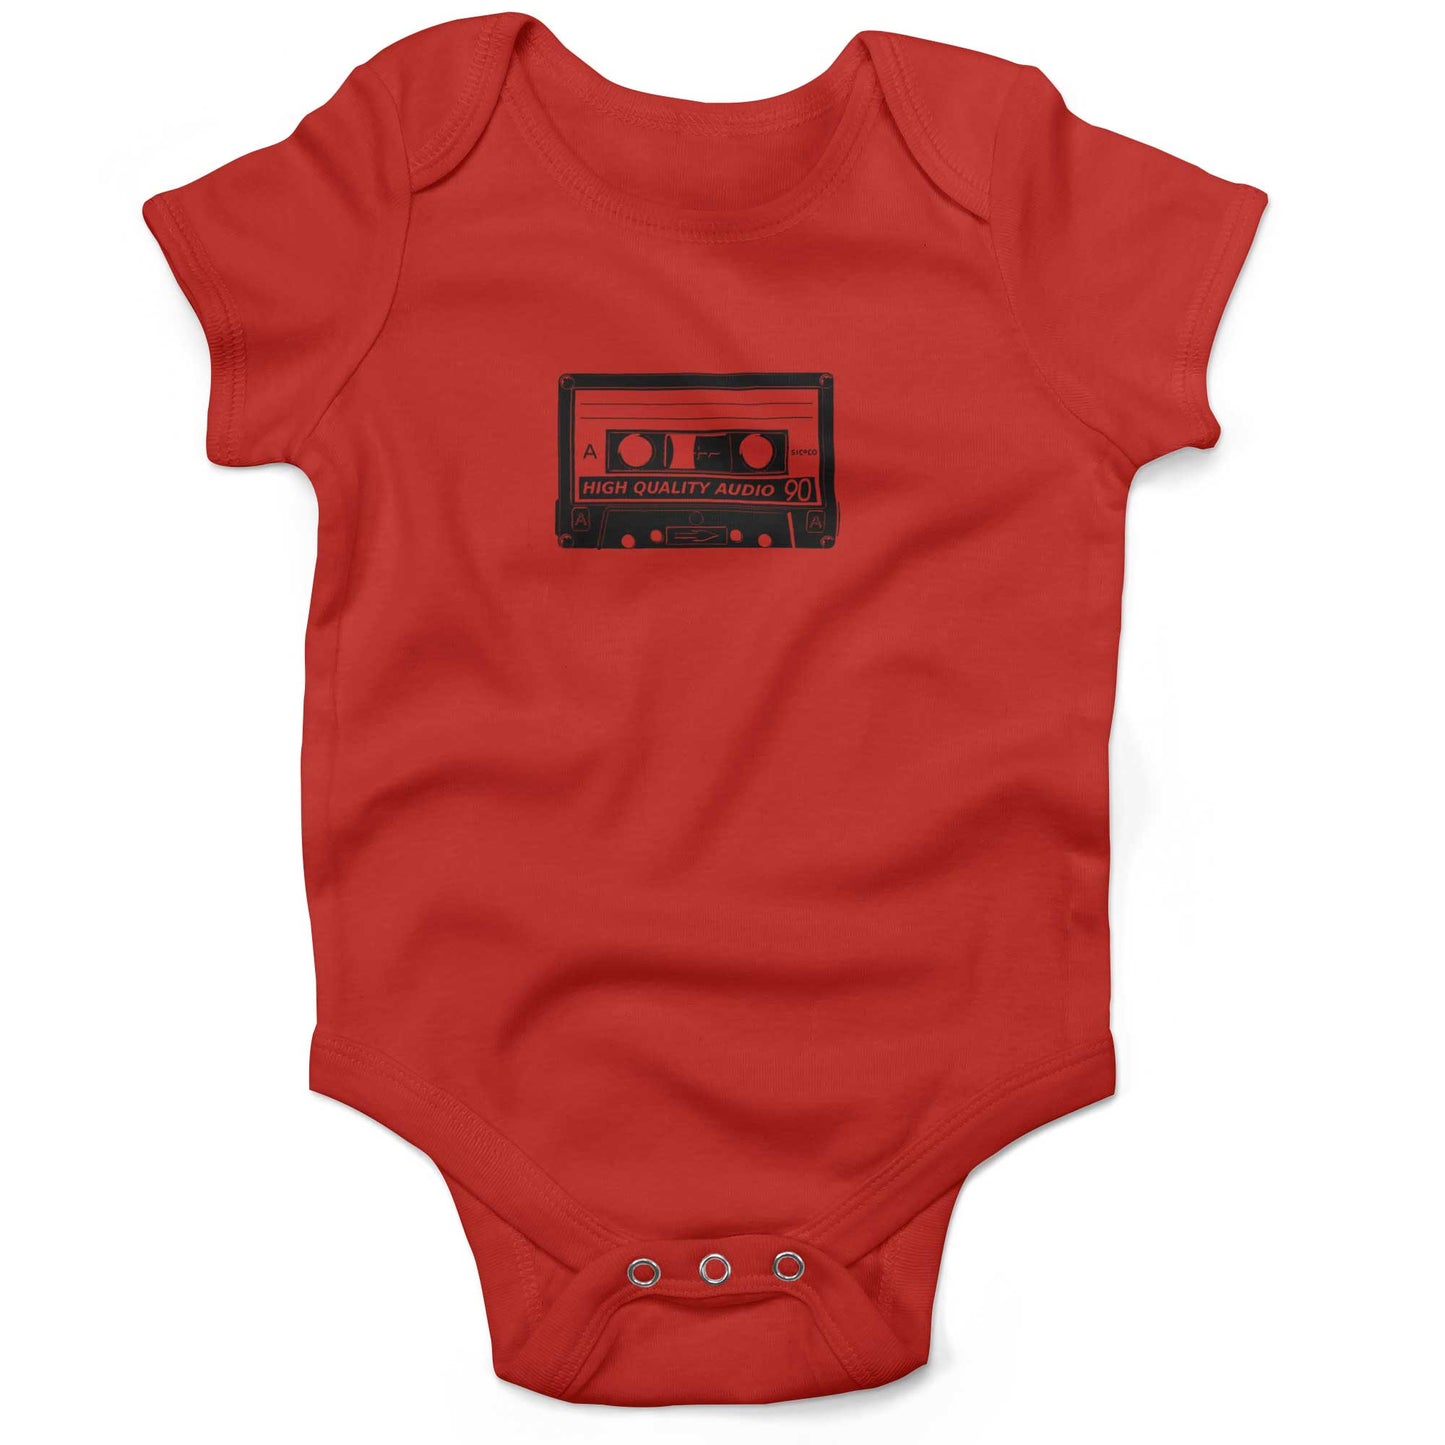 Cassette Tape Infant Bodysuit or Raglan Baby Tee-Organic Red-3-6 months